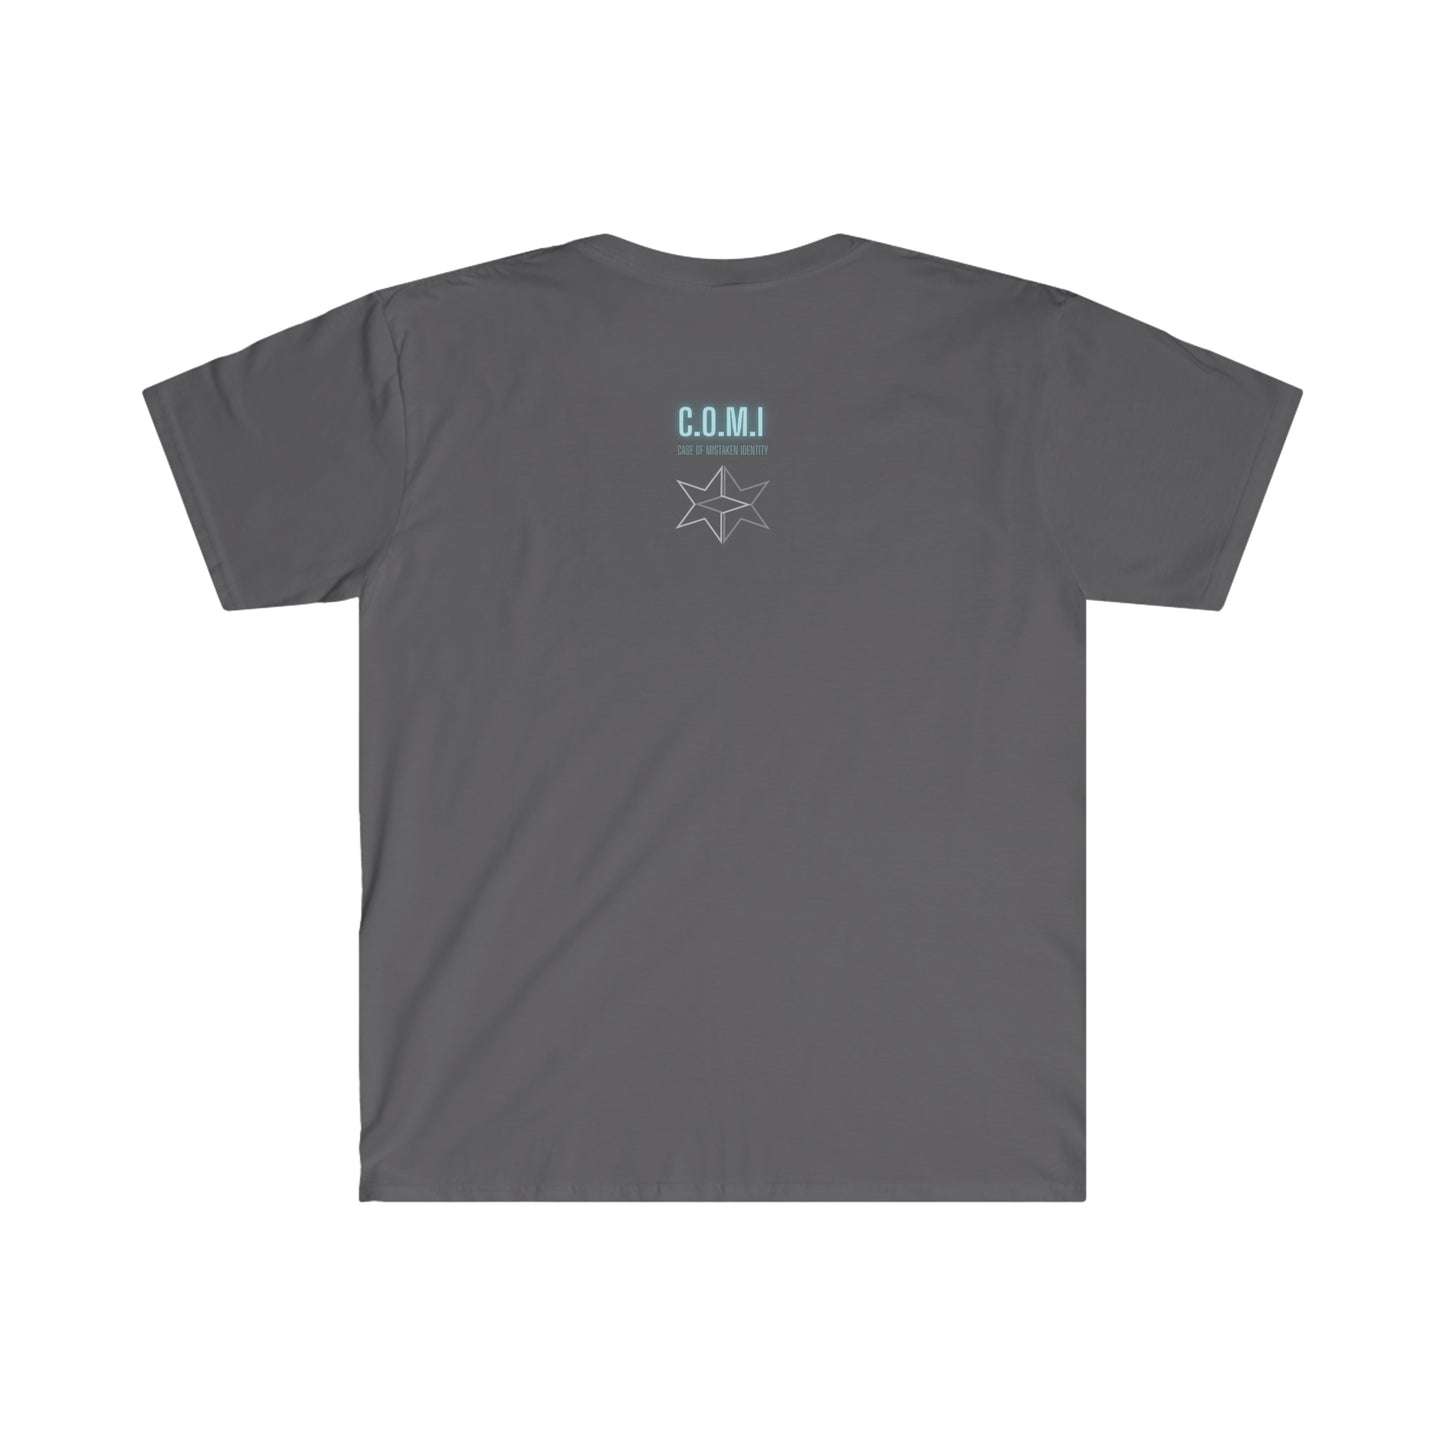 Neon Americana Hot Rod - Unisex Softstyle T-Shirt